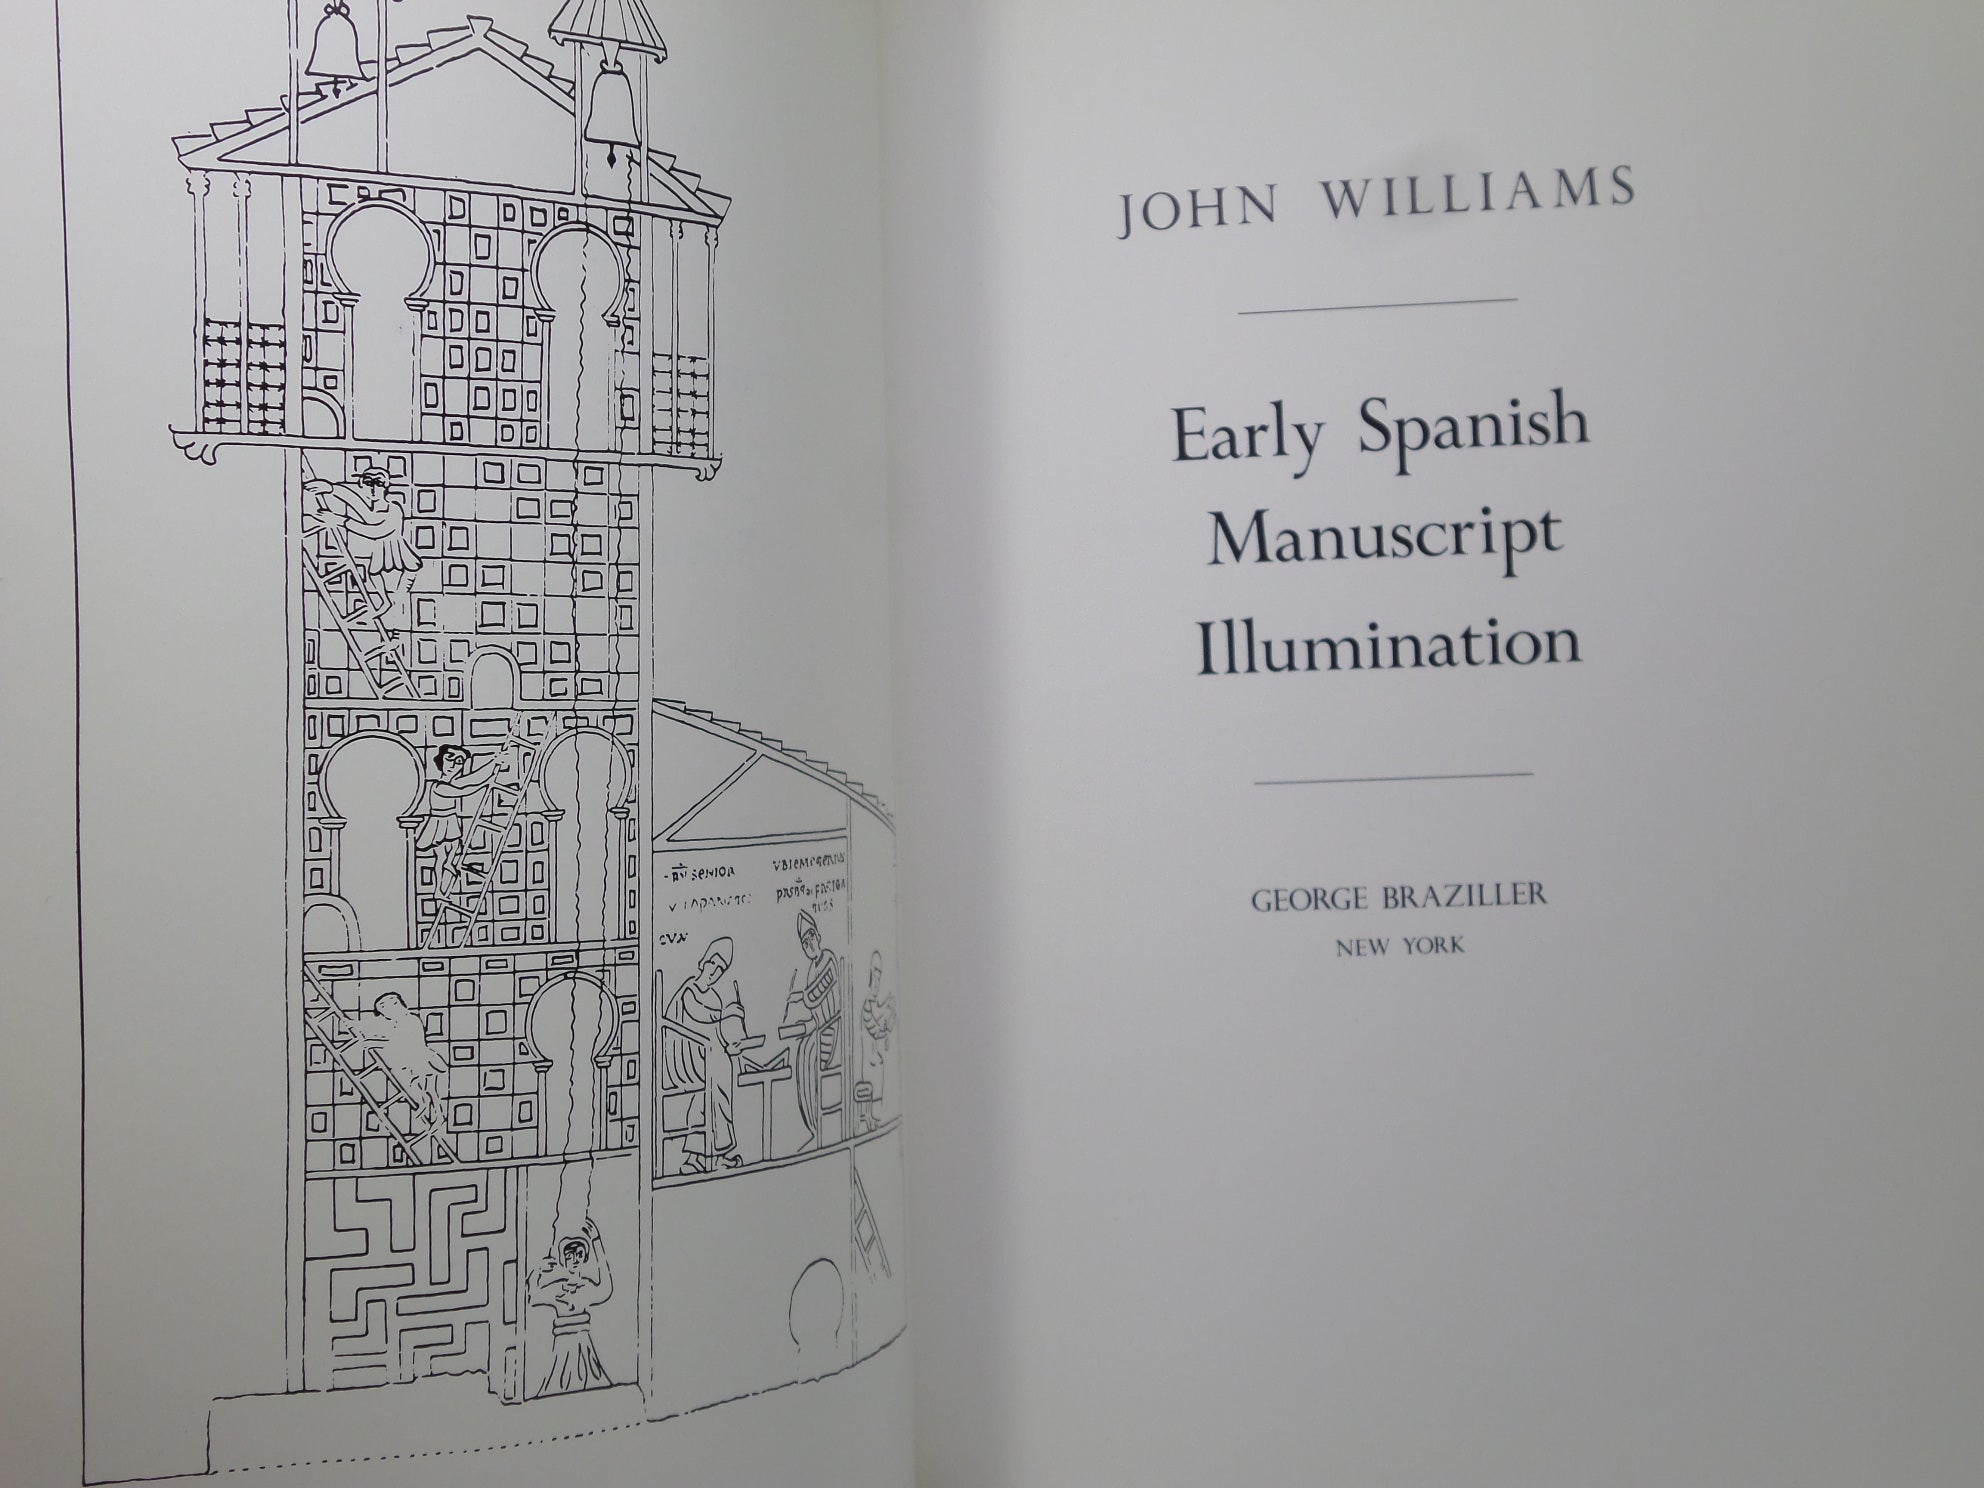 EARLY SPANISH MANUSCRIPT ILLUMINATION BY JOHN WILLIAMS 1977